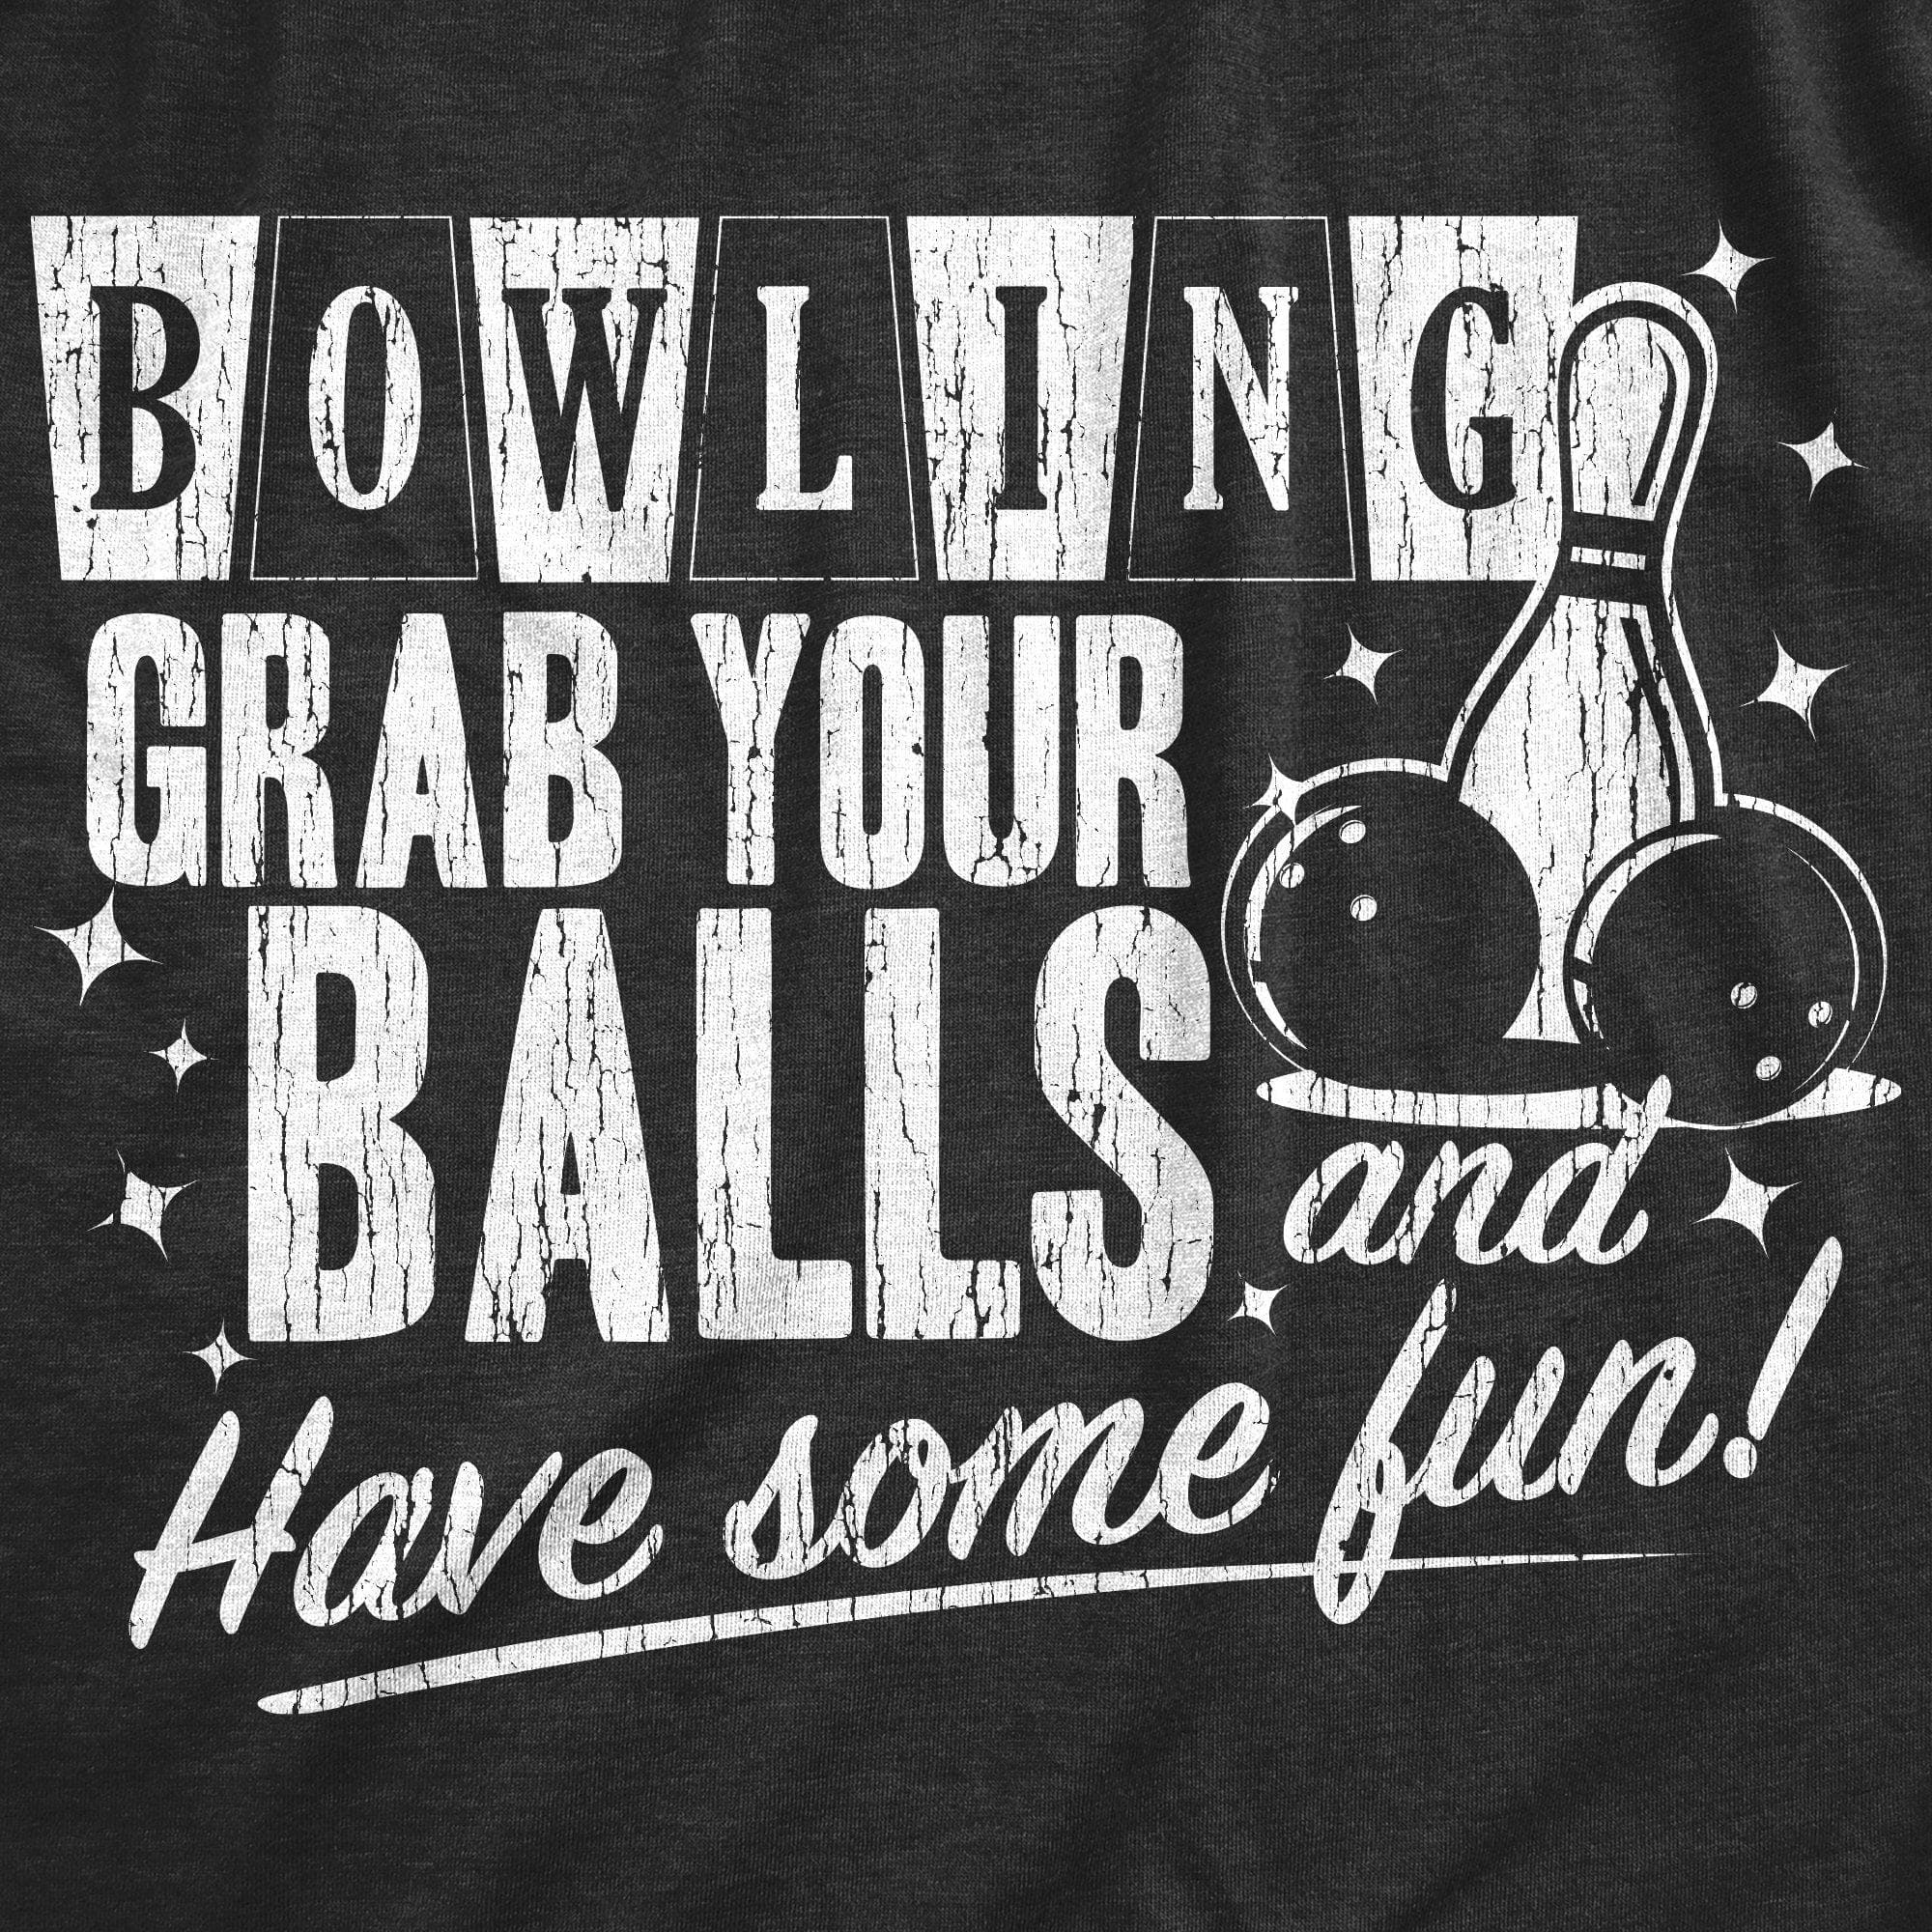 Bowling Grab Your Balls Have Some Fun Men's Tshirt - Crazy Dog T-Shirts